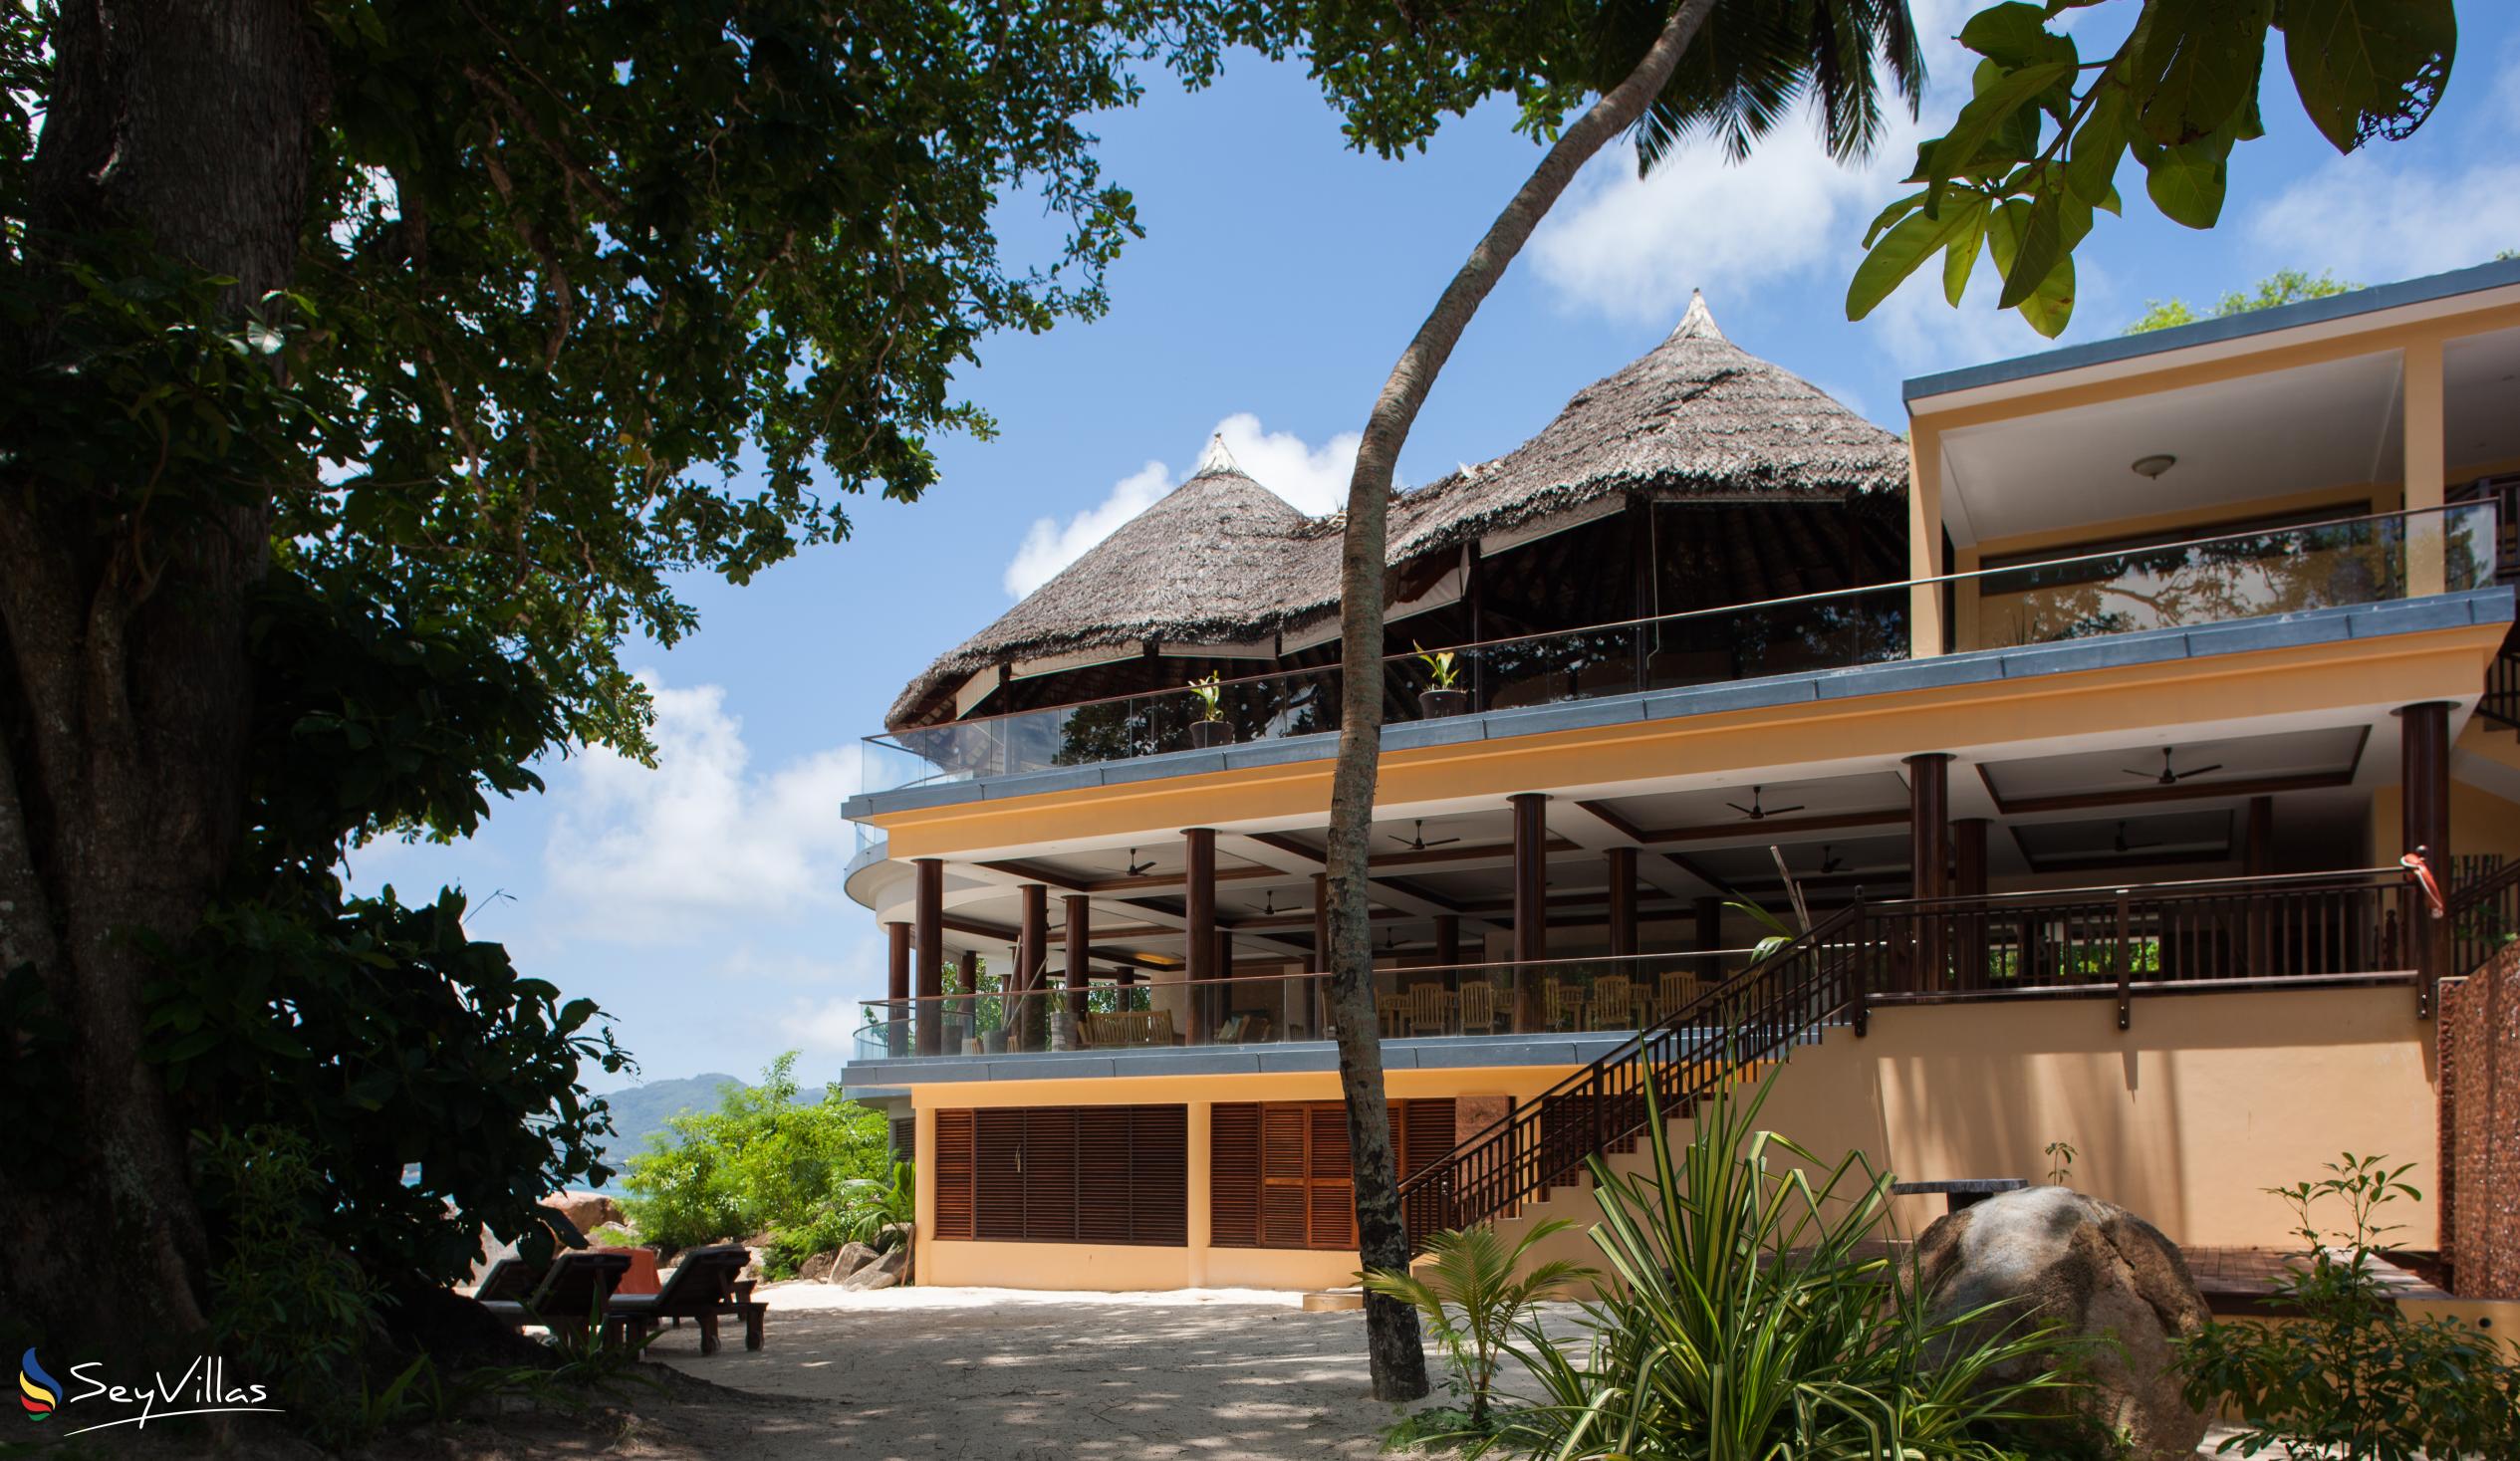 Foto 40: Cerf Island Resort - Intérieur - Cerf Island (Seychelles)